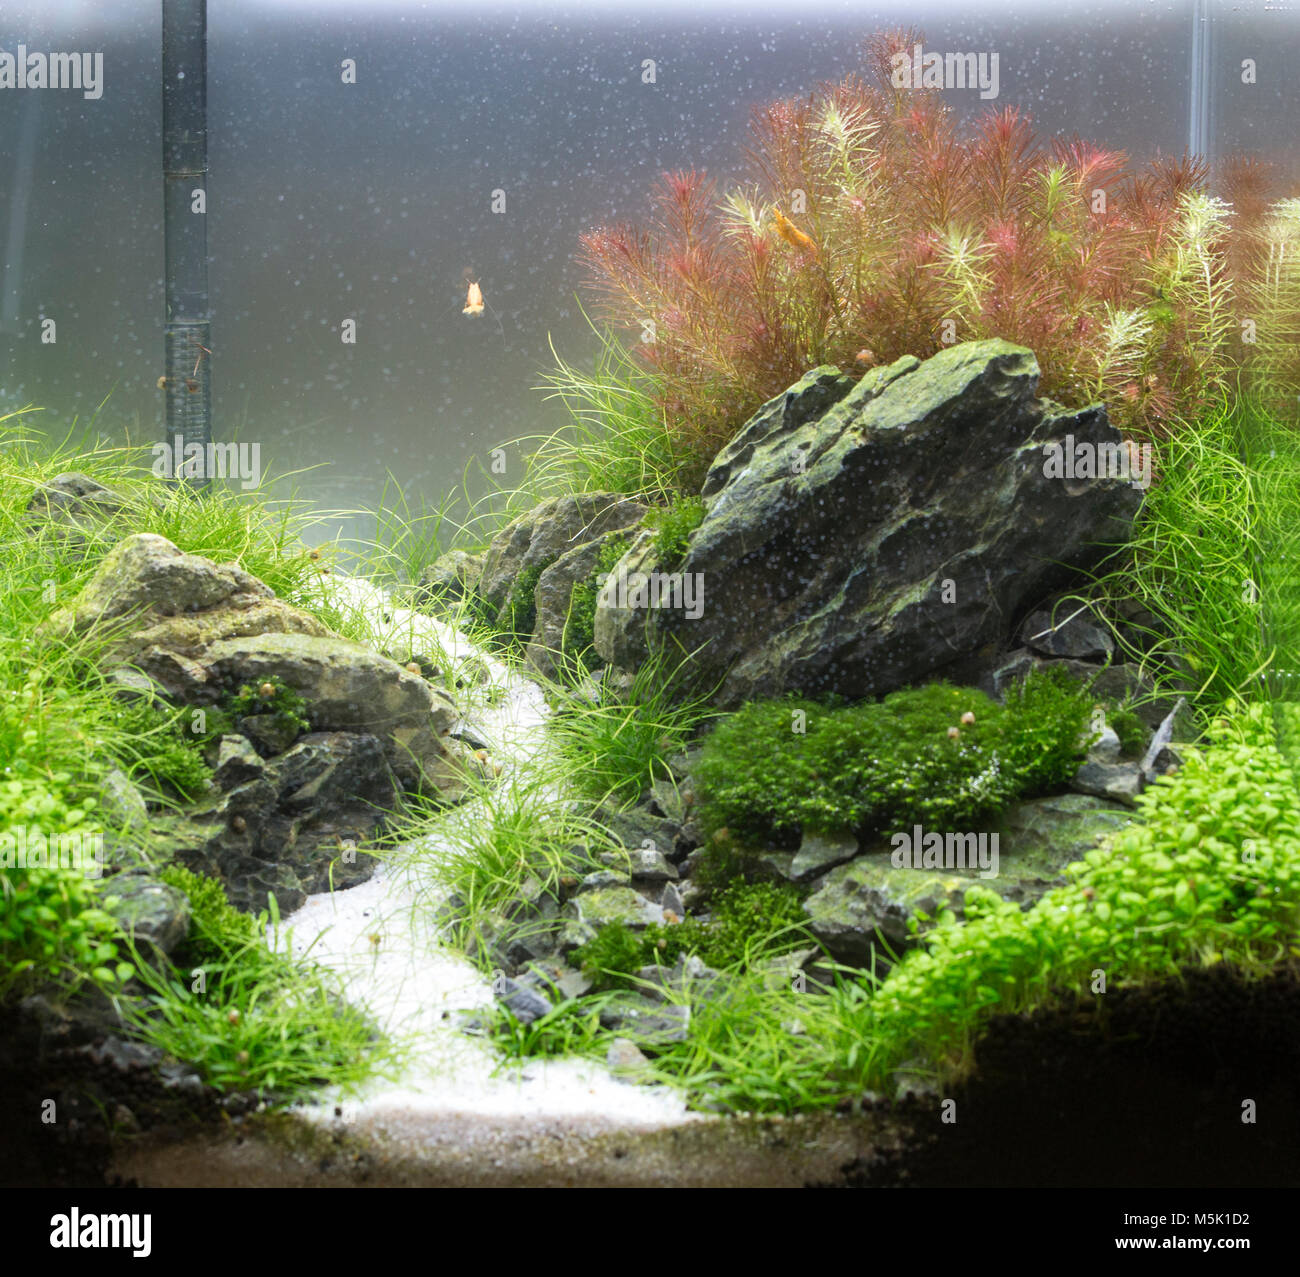 Beautiful tropical planted freshwater aquarium with shrimps Stock Photo